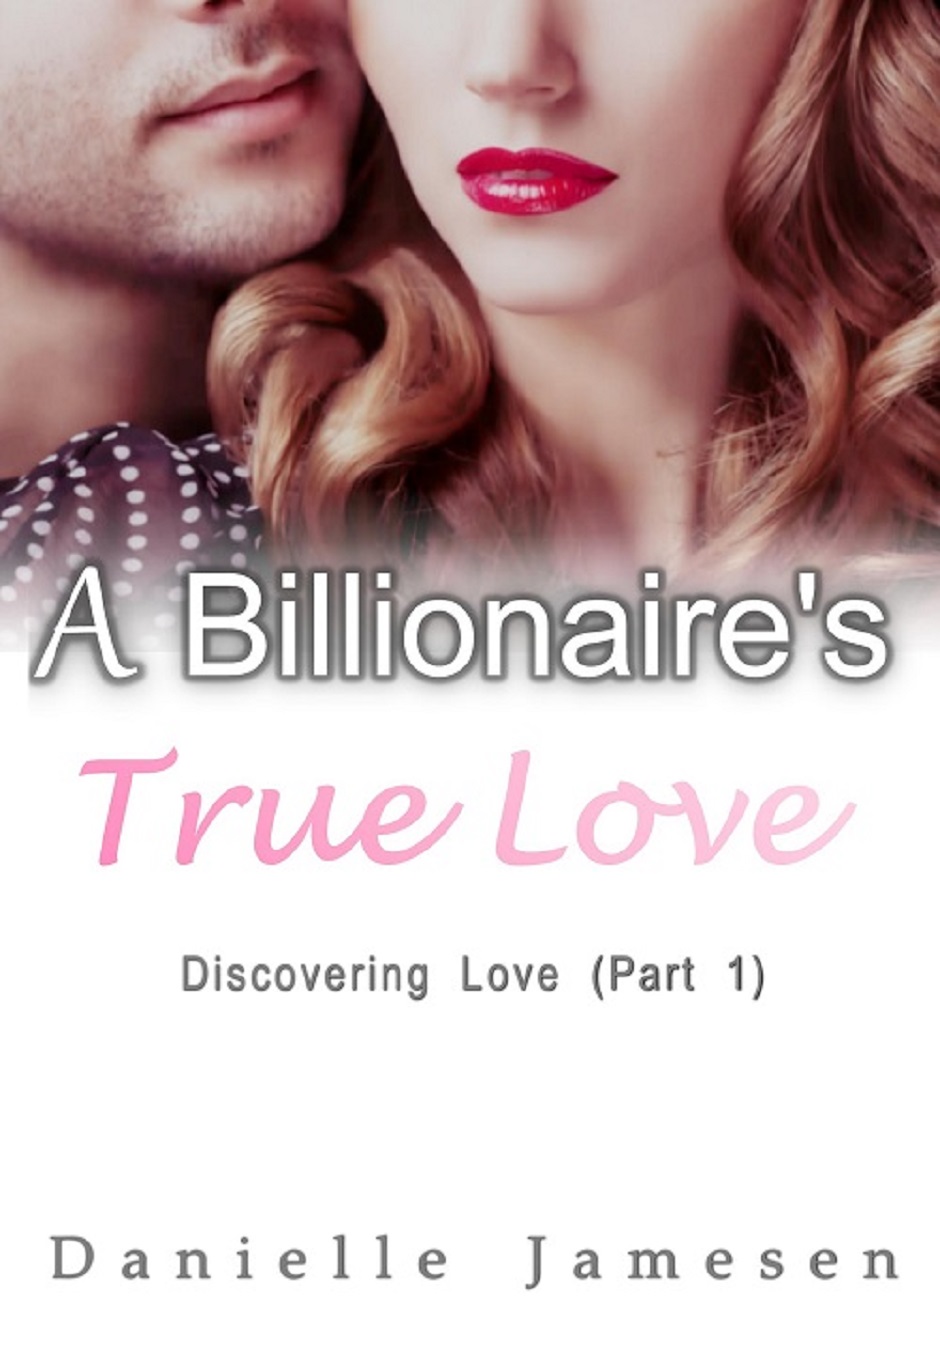 A Billionaire’s True Love: Discovering Love (Part 1) by Danielle Jamesen